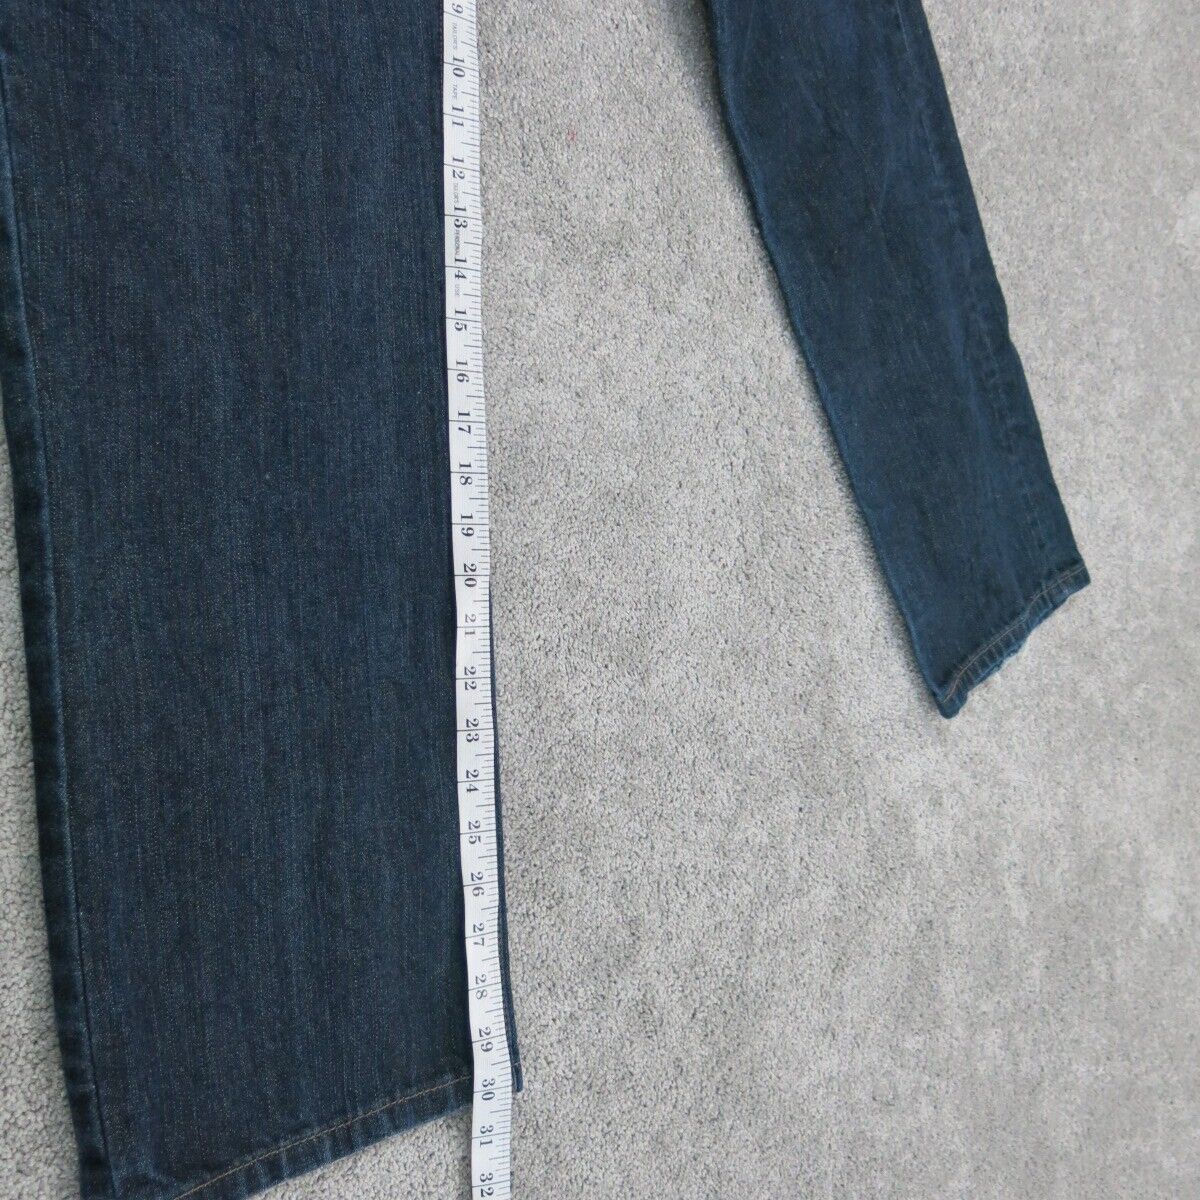 Levis 514 Men Straight Leg Jeans Denim Stretch Mid Rise Pocket Blue Size W34XL30